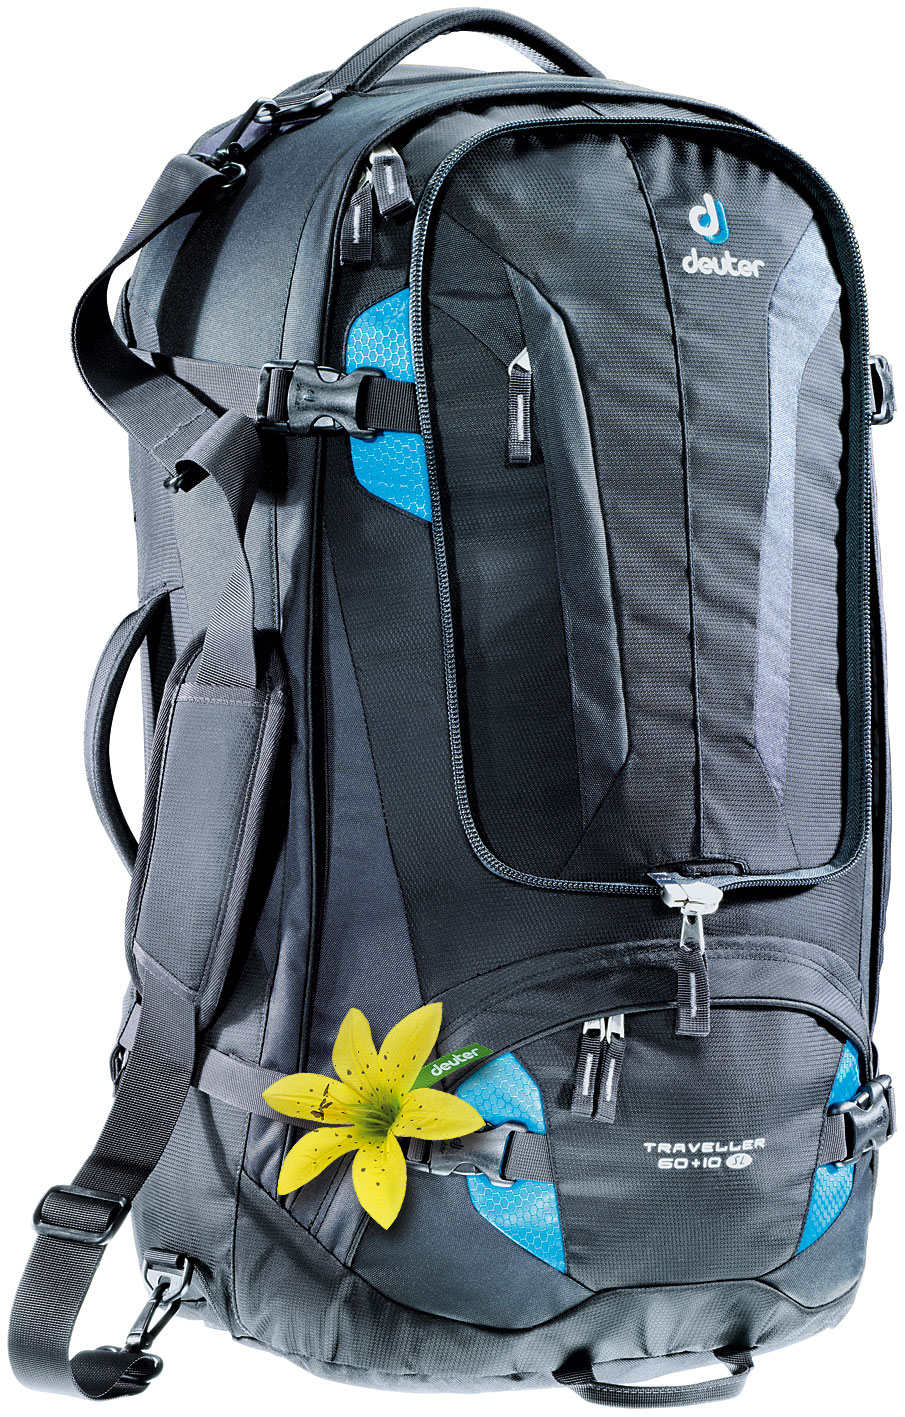 Deuter Traveller 60L + 10 SL Ladies Travel Backpack